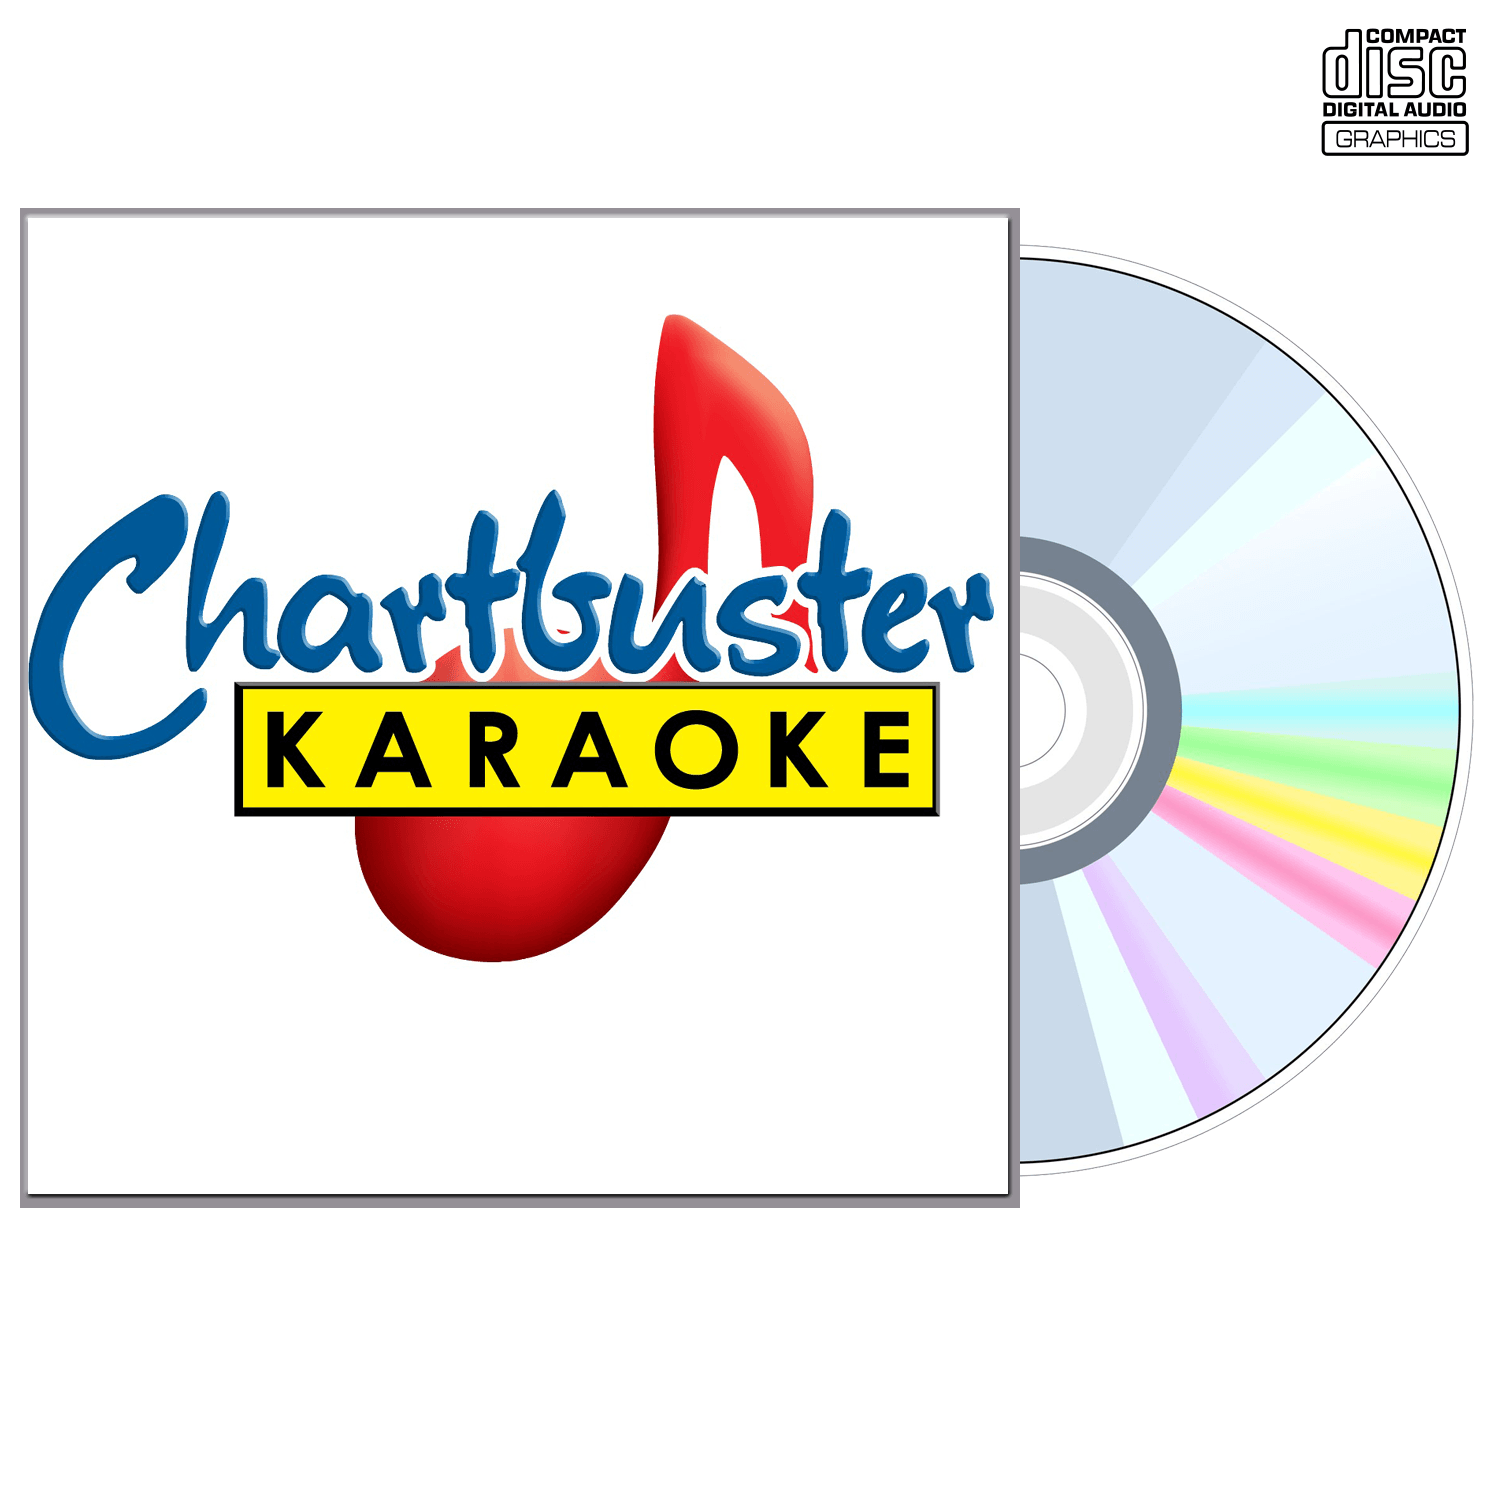 Anita Cochran - CD+G - Chartbuster Karaoke - Karaoke Home Entertainment